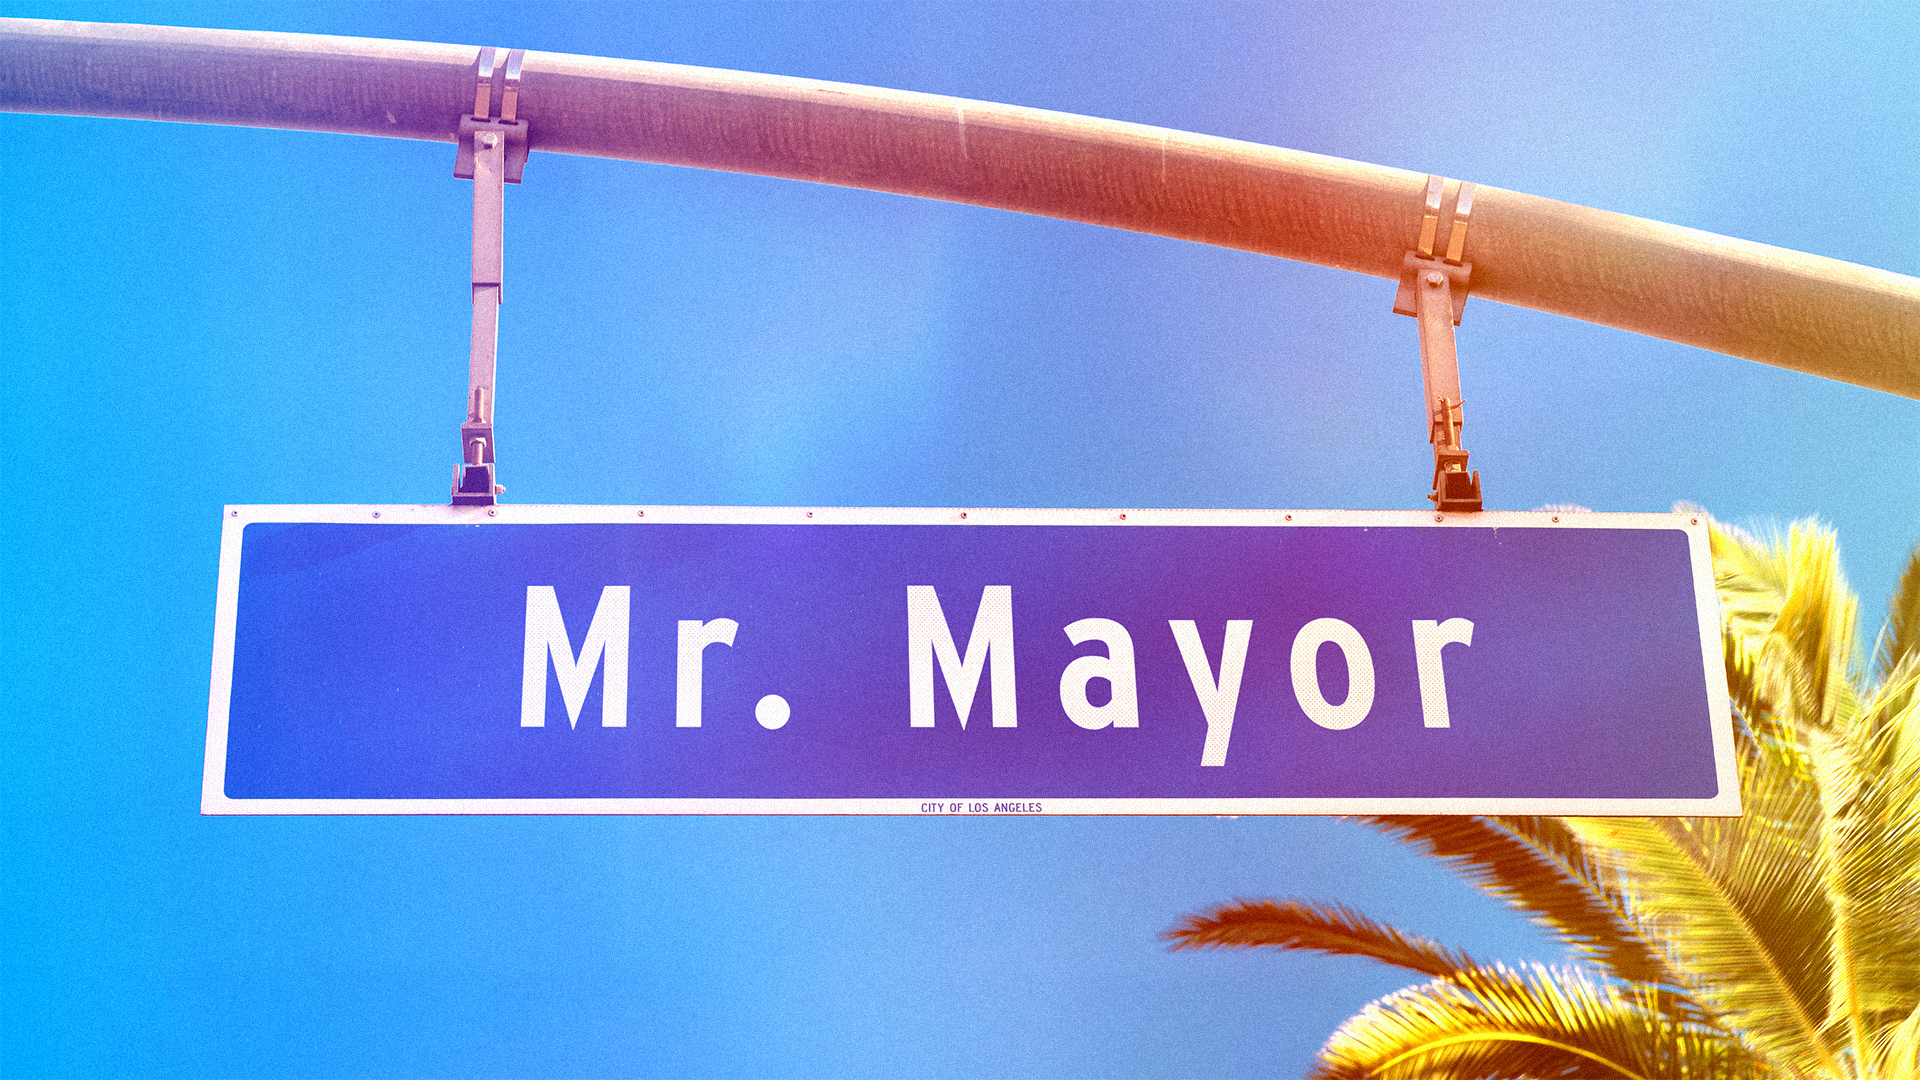 Mr. Mayor Street Sign